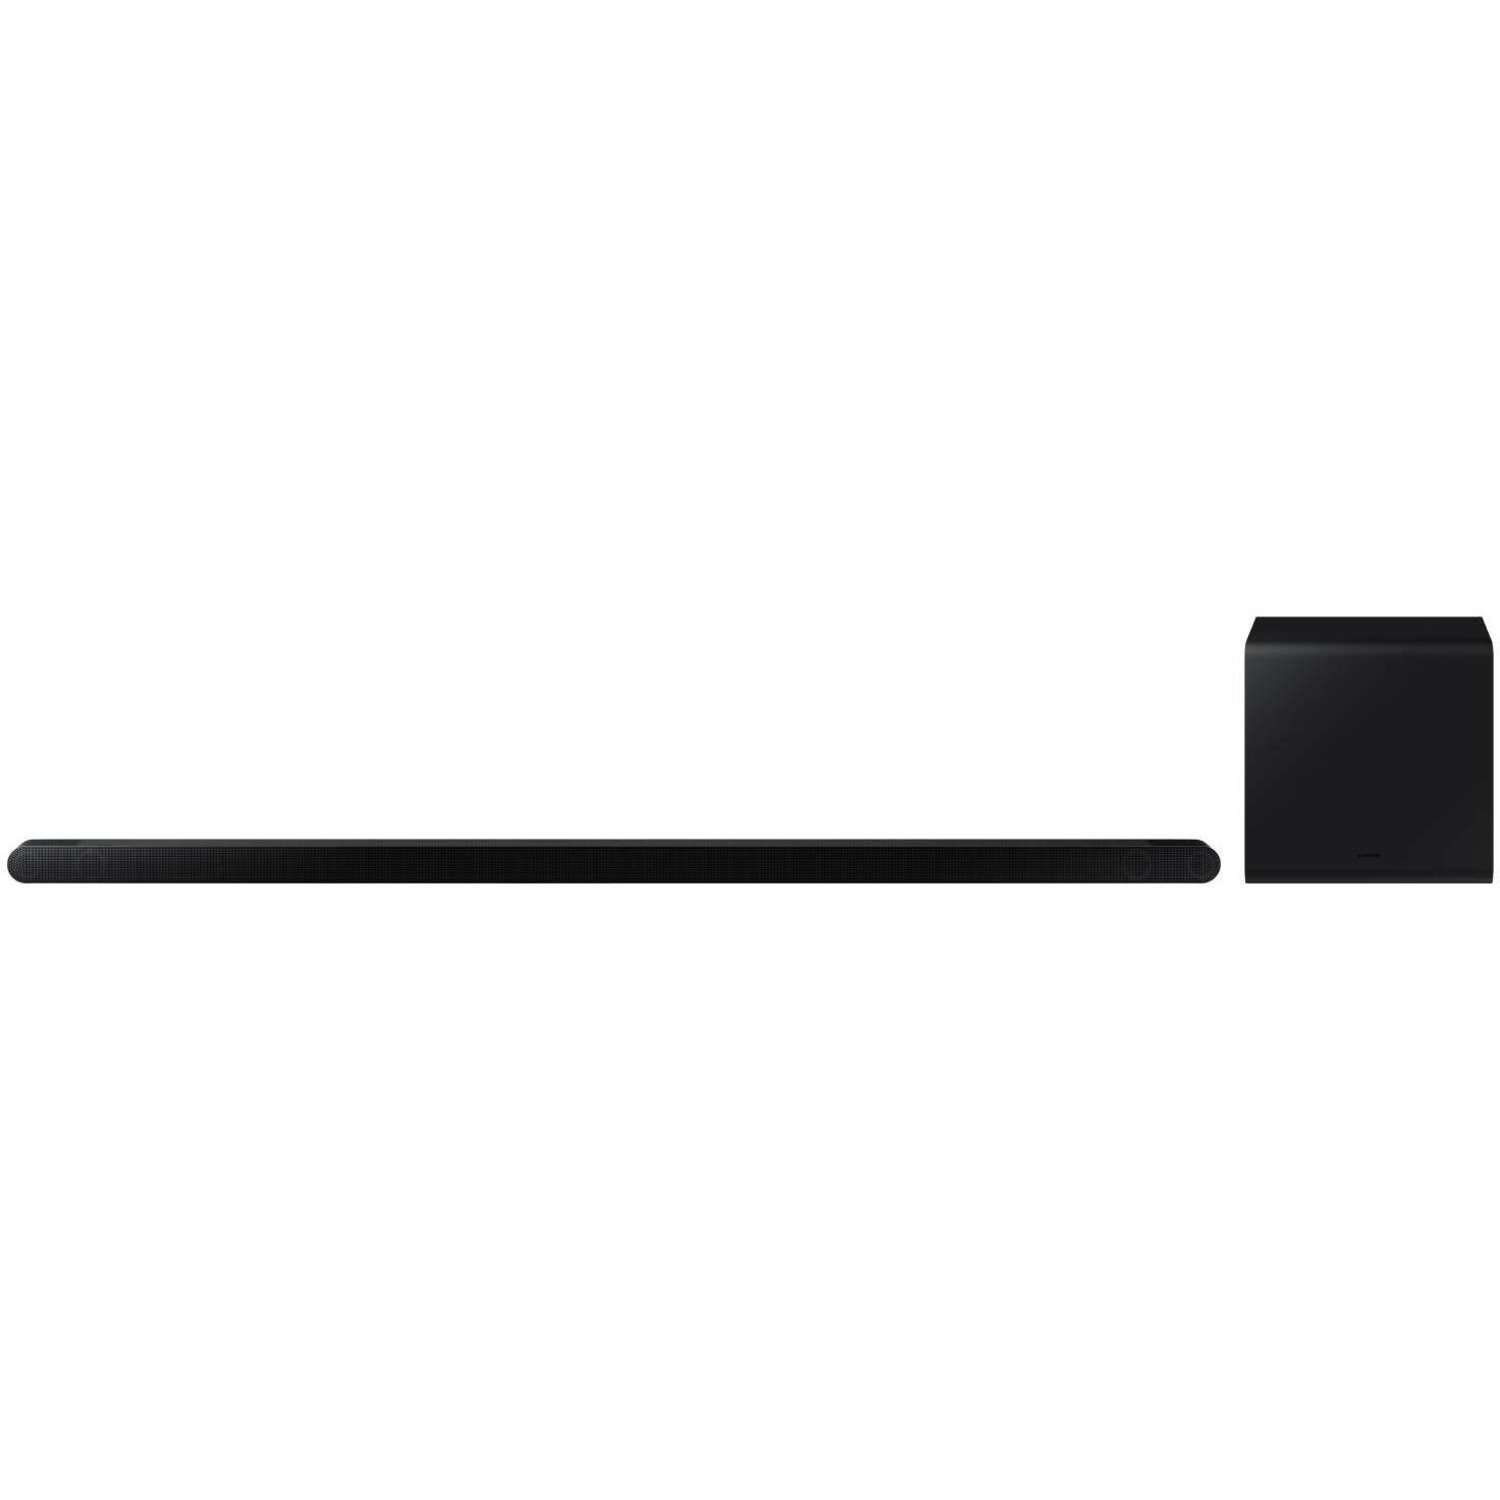 Samsung HW-S800B 3.1.2 Bluetooth Sound Bar Speaker - 330 W RMS - Alexa, Google Assistant Supported - Black